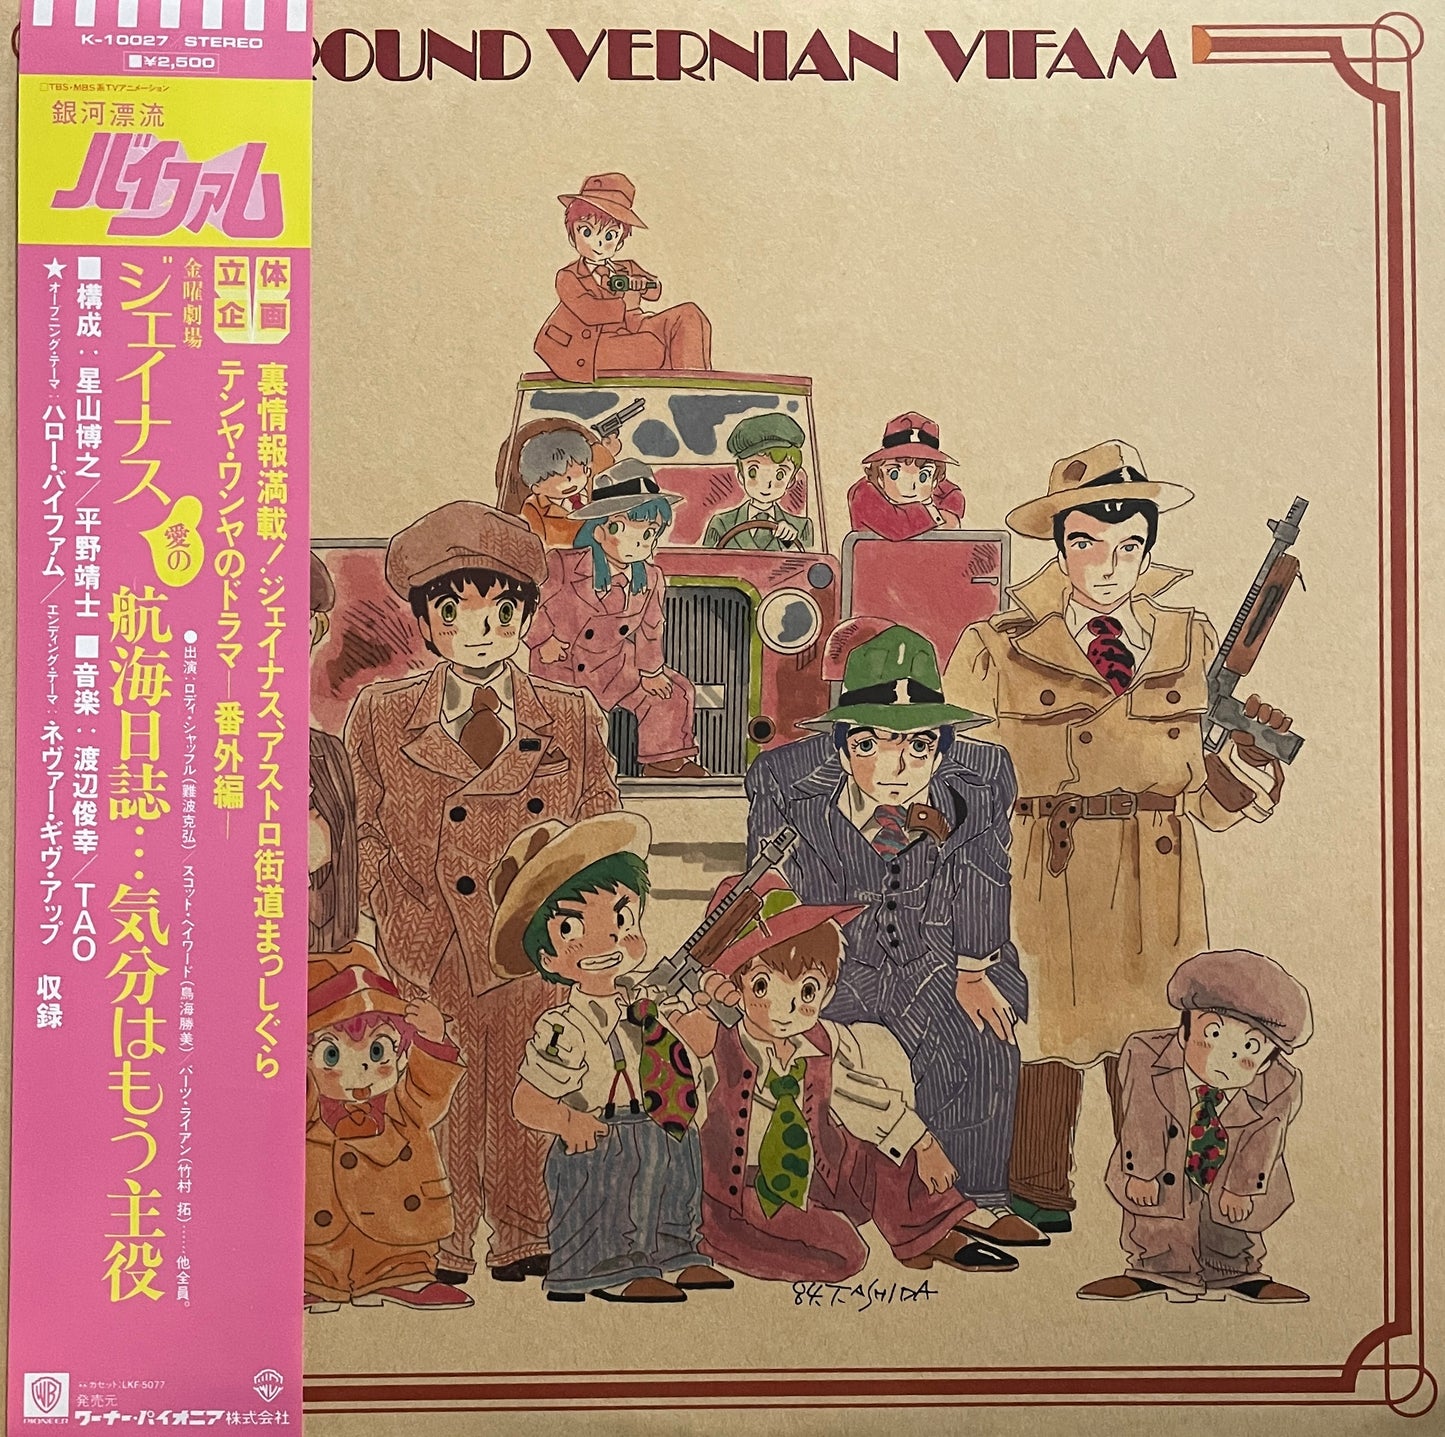 Round Vernian Vifam (1984)